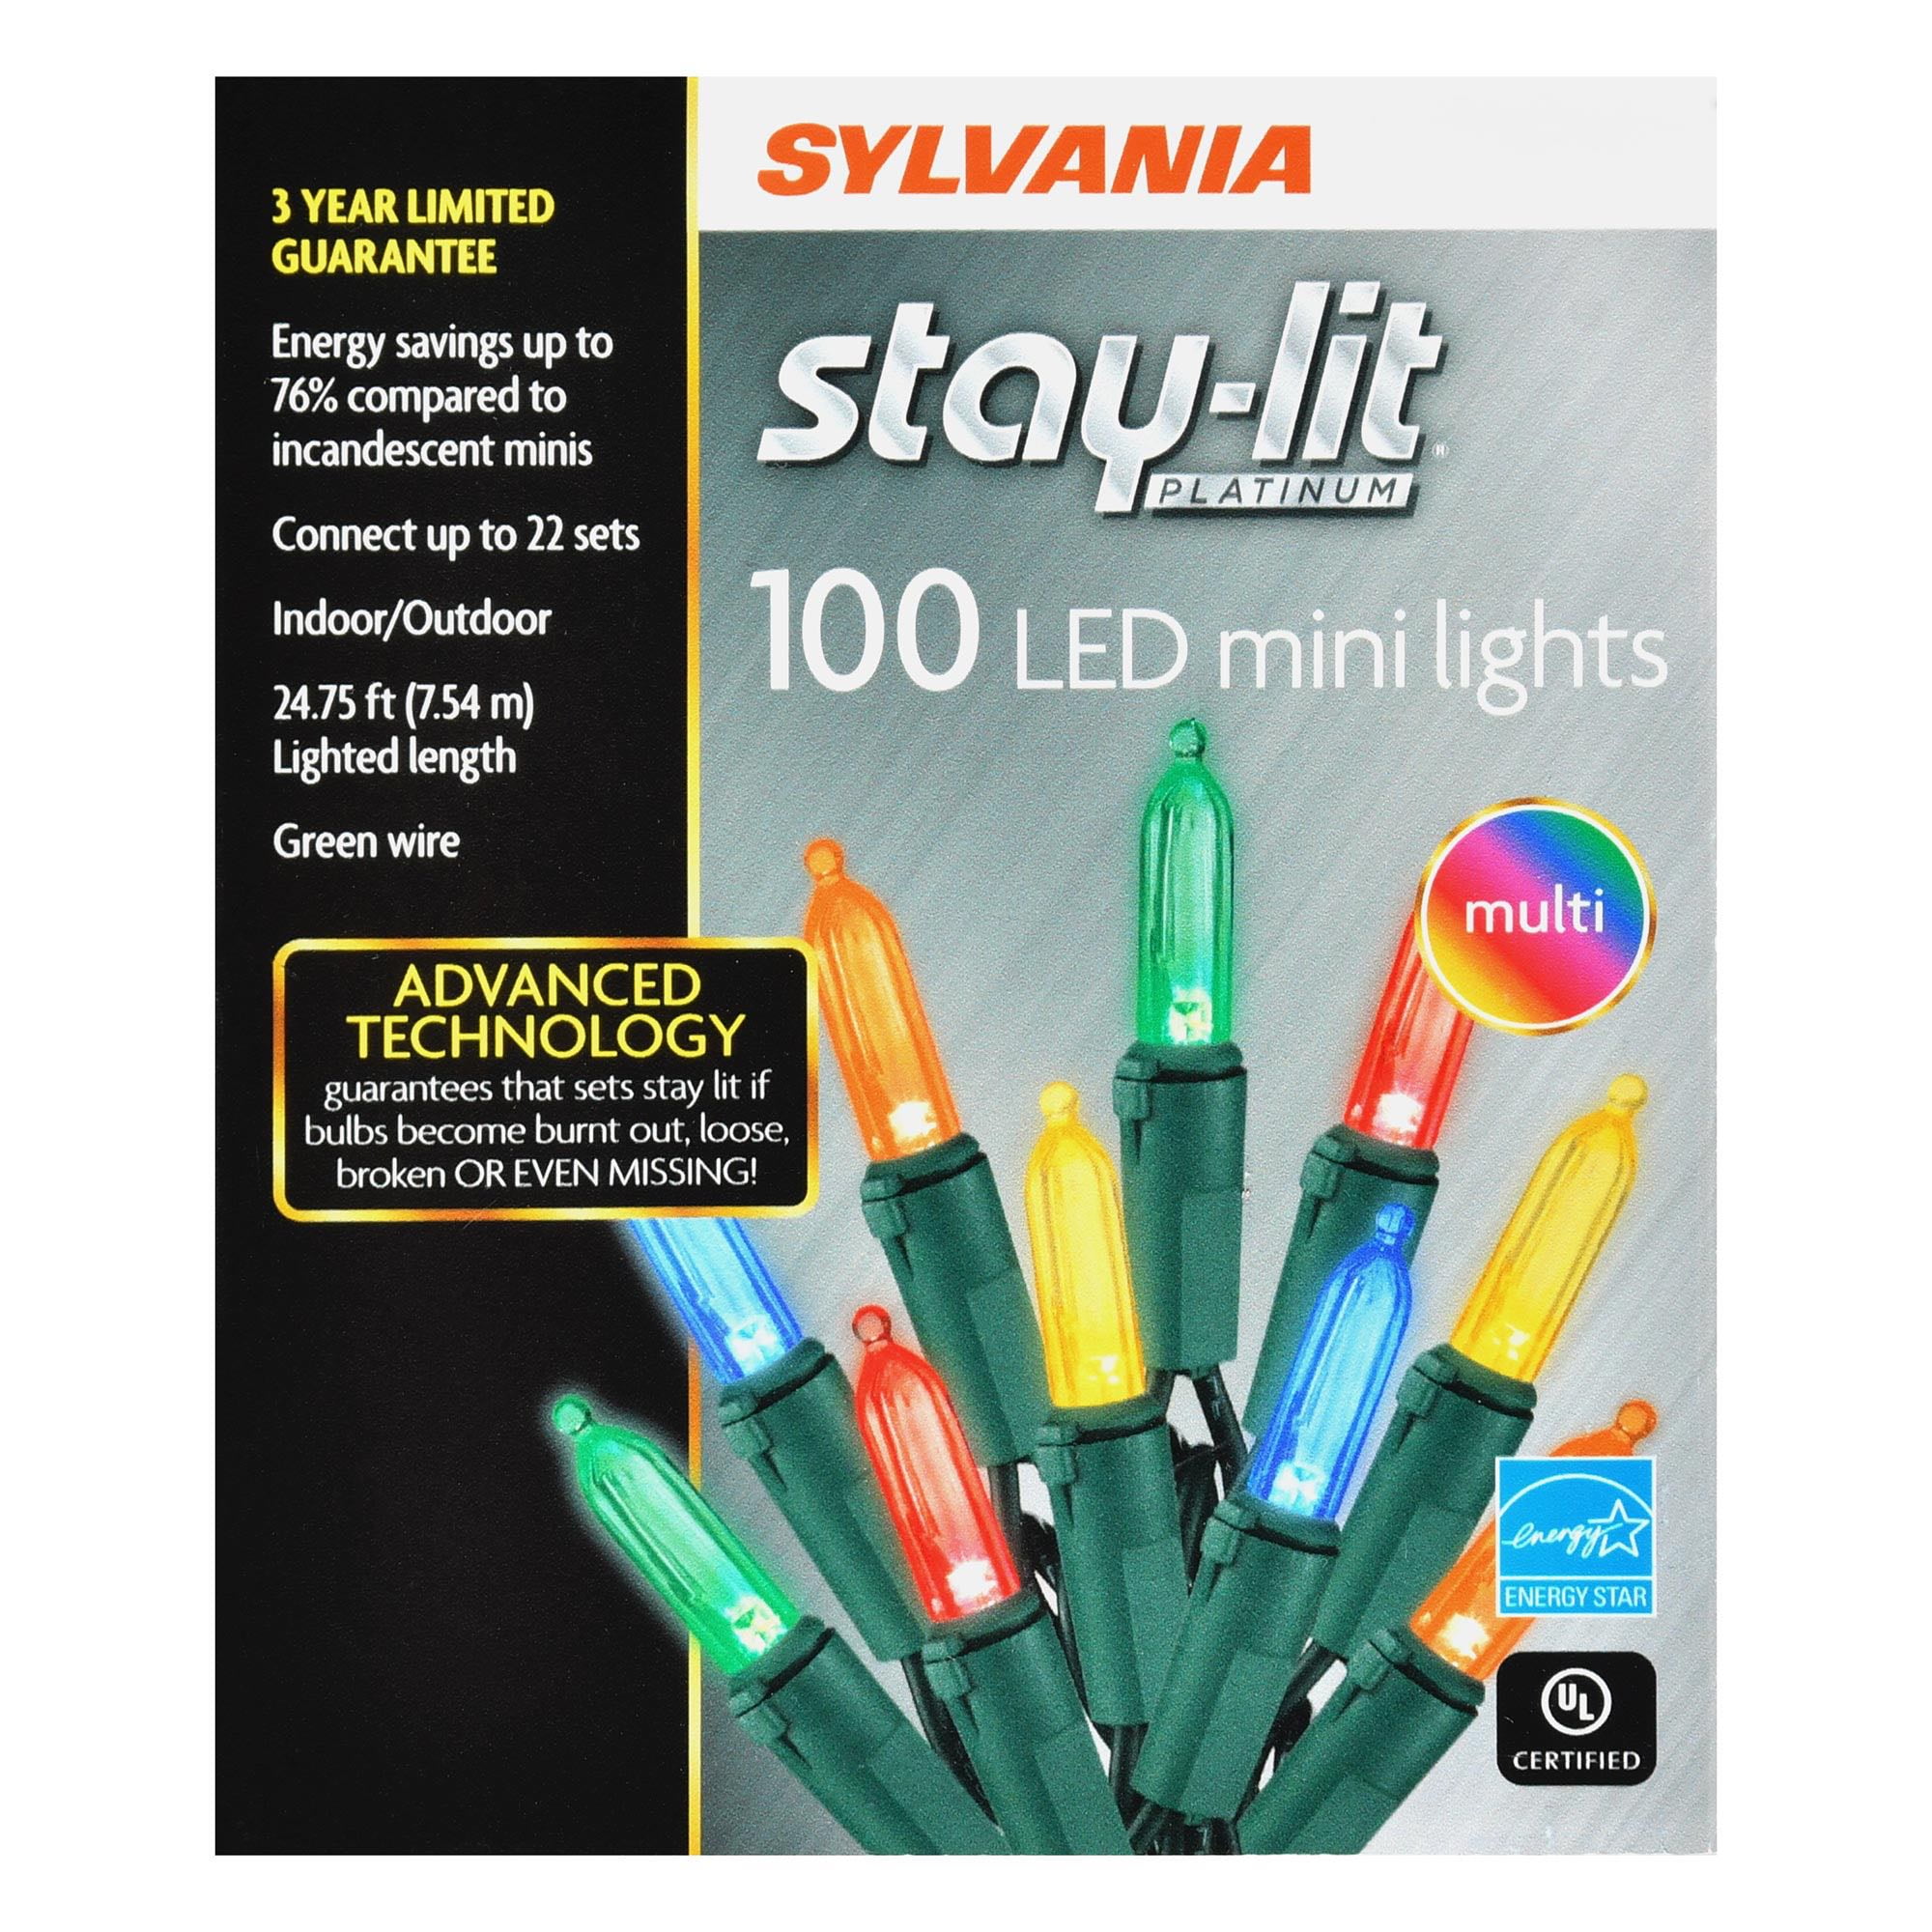 SYLVANIA Stay-lit Platinum Indoor/Outdoor Christmas Light 100 Mini Lights Mu... 